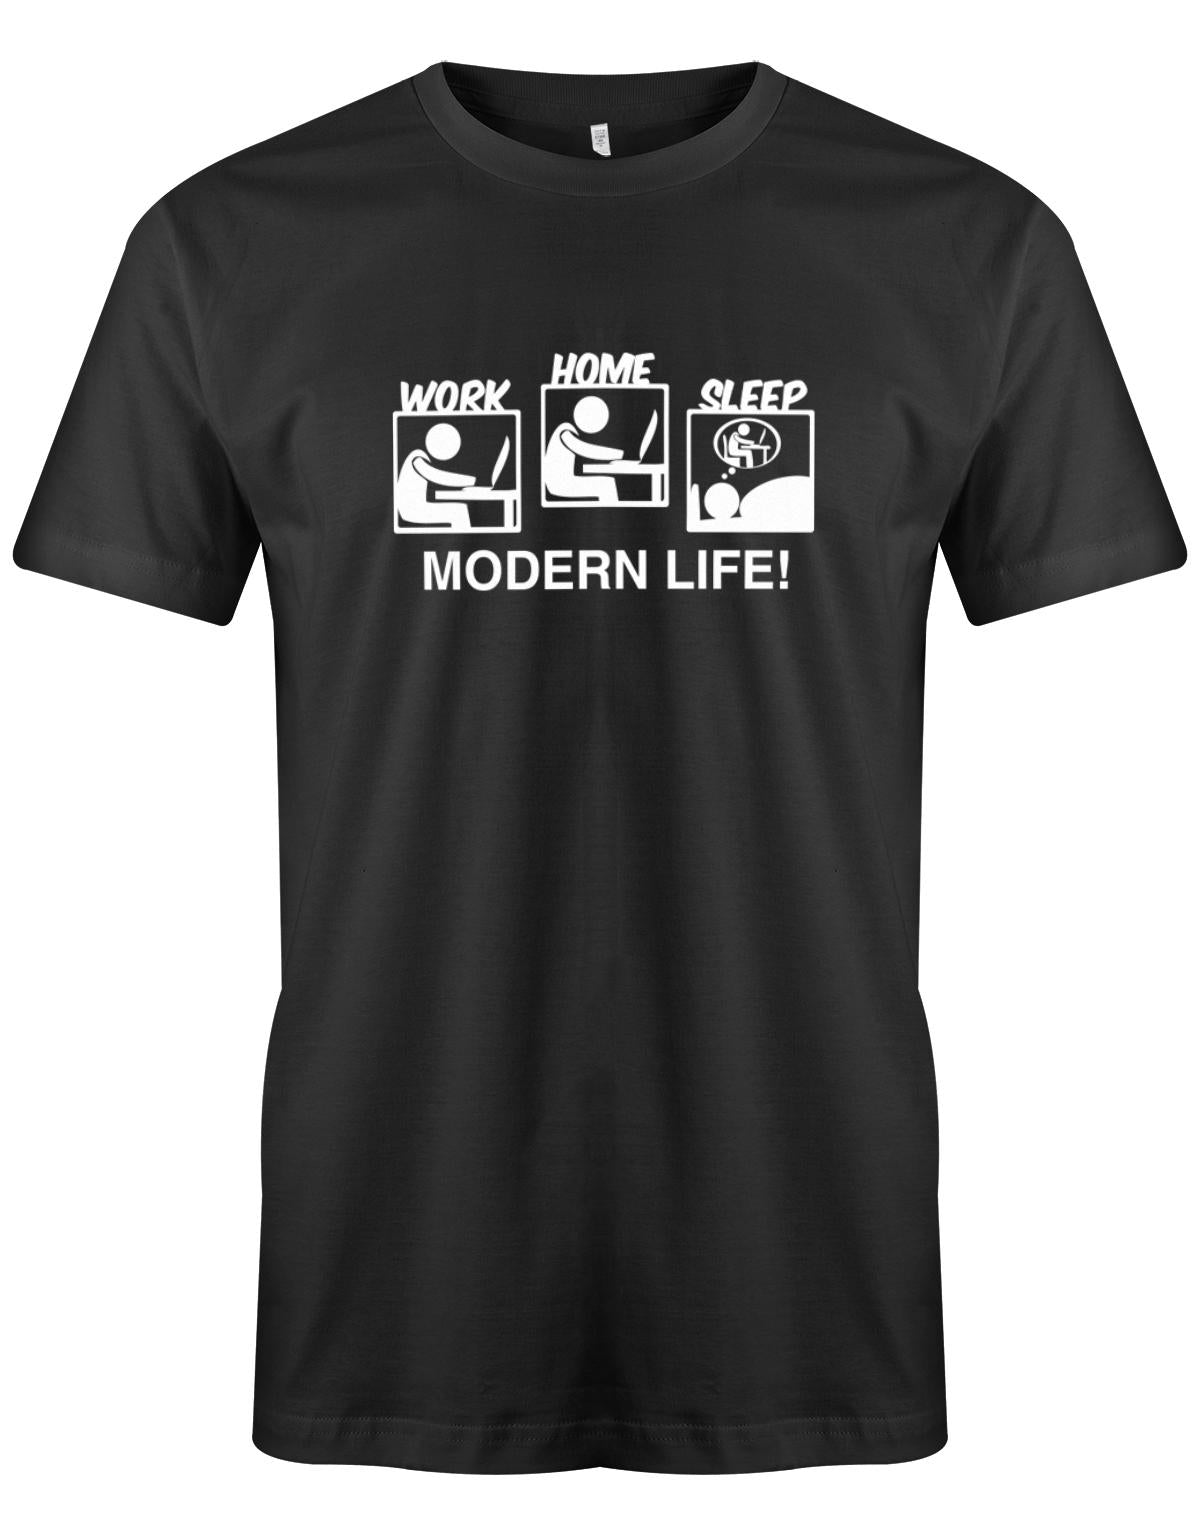 Modern-Life-Work-Home-Sleep-Herren-Gamer-Shirt-SChwarz